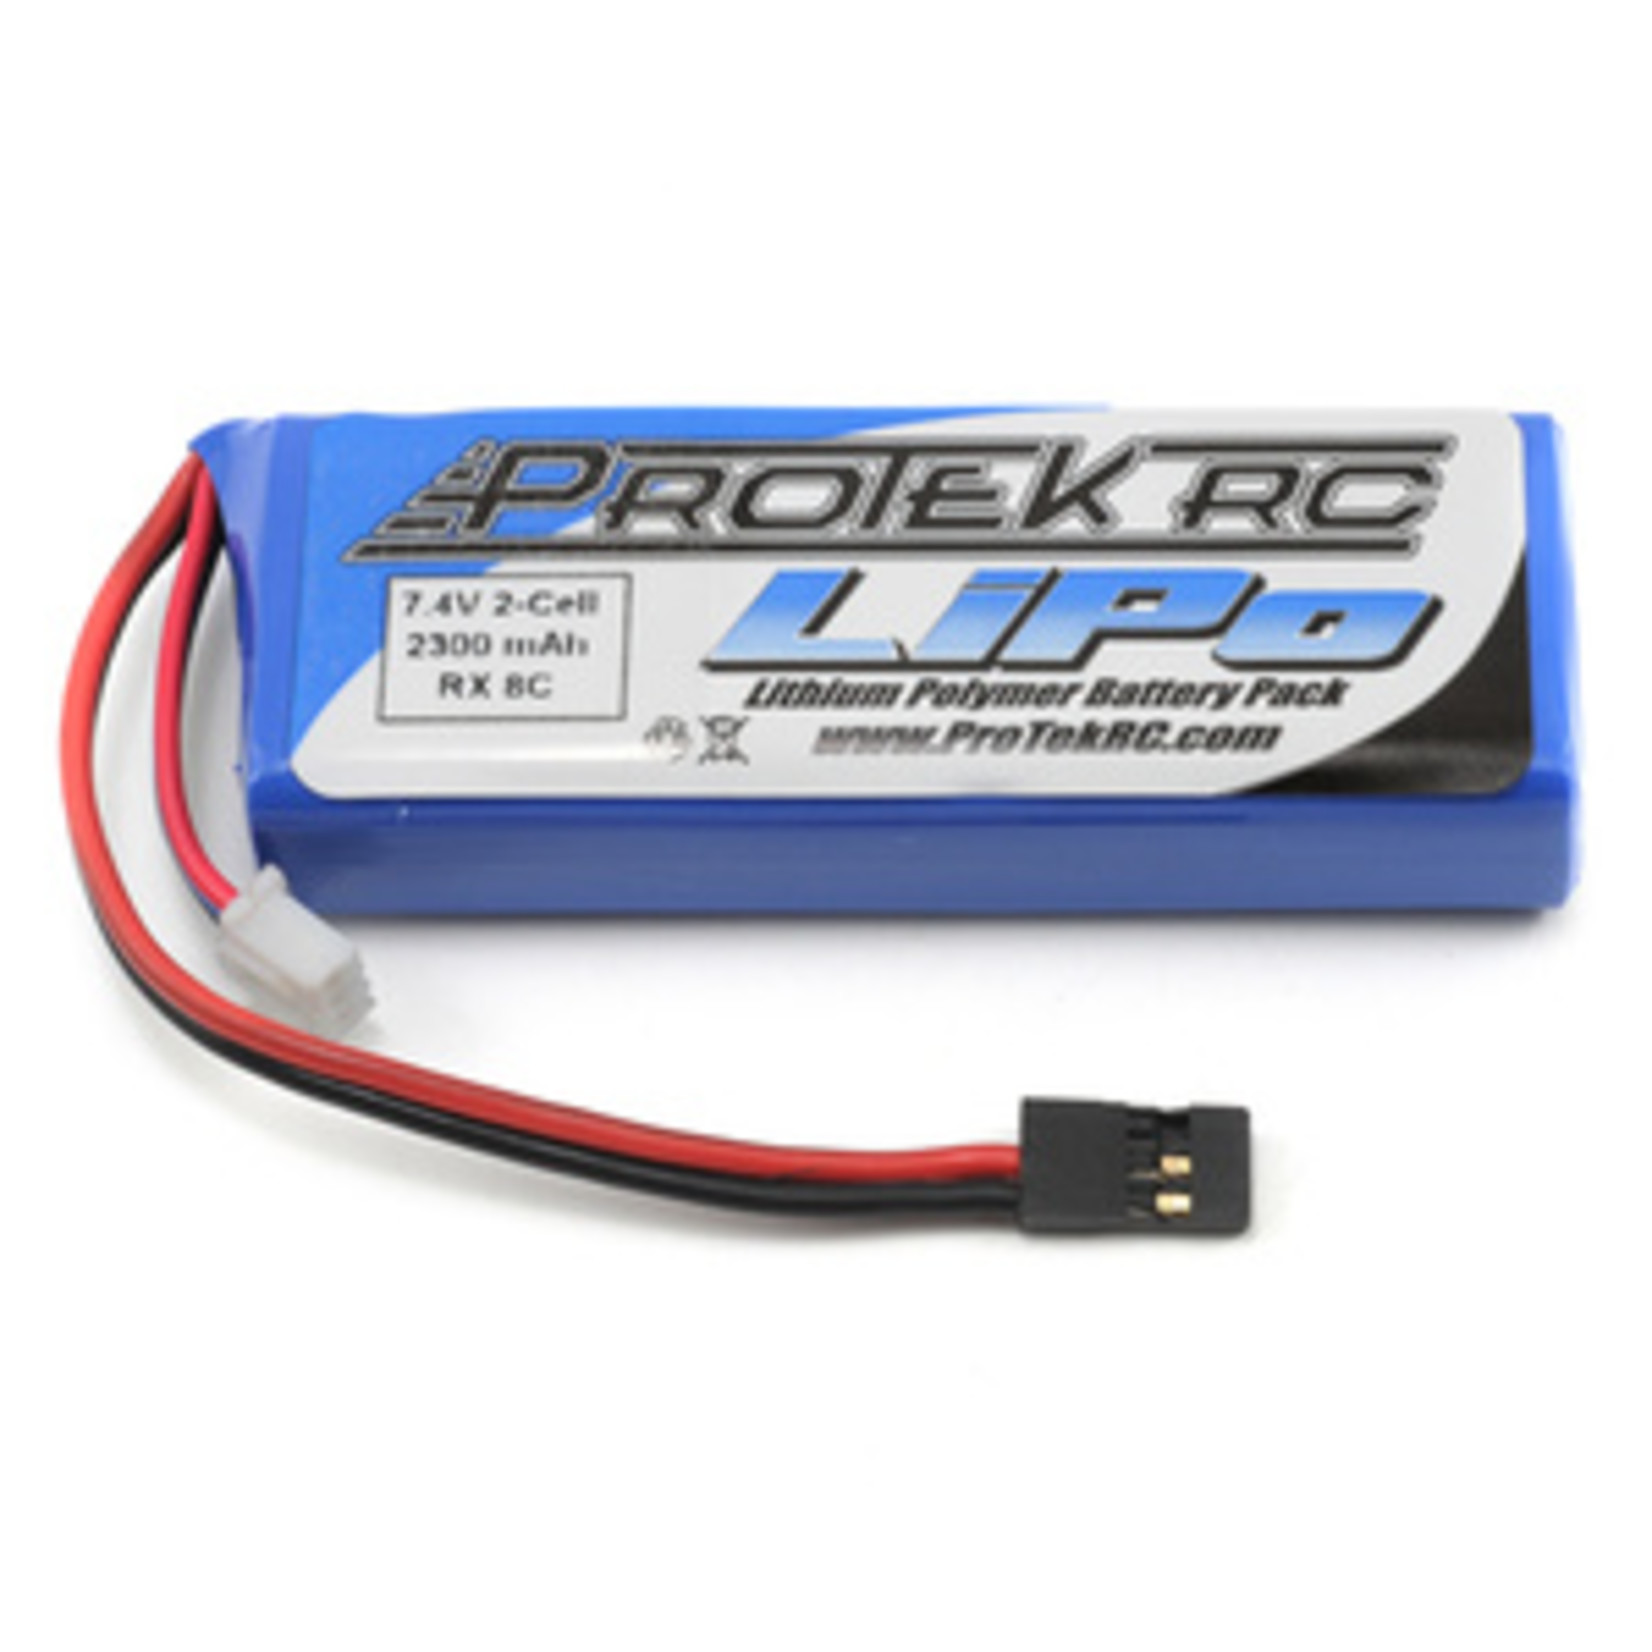 Protek R/C PTK-5196   2S 7.4V 2300mAh LiPo Flat Receiver Battery Pack